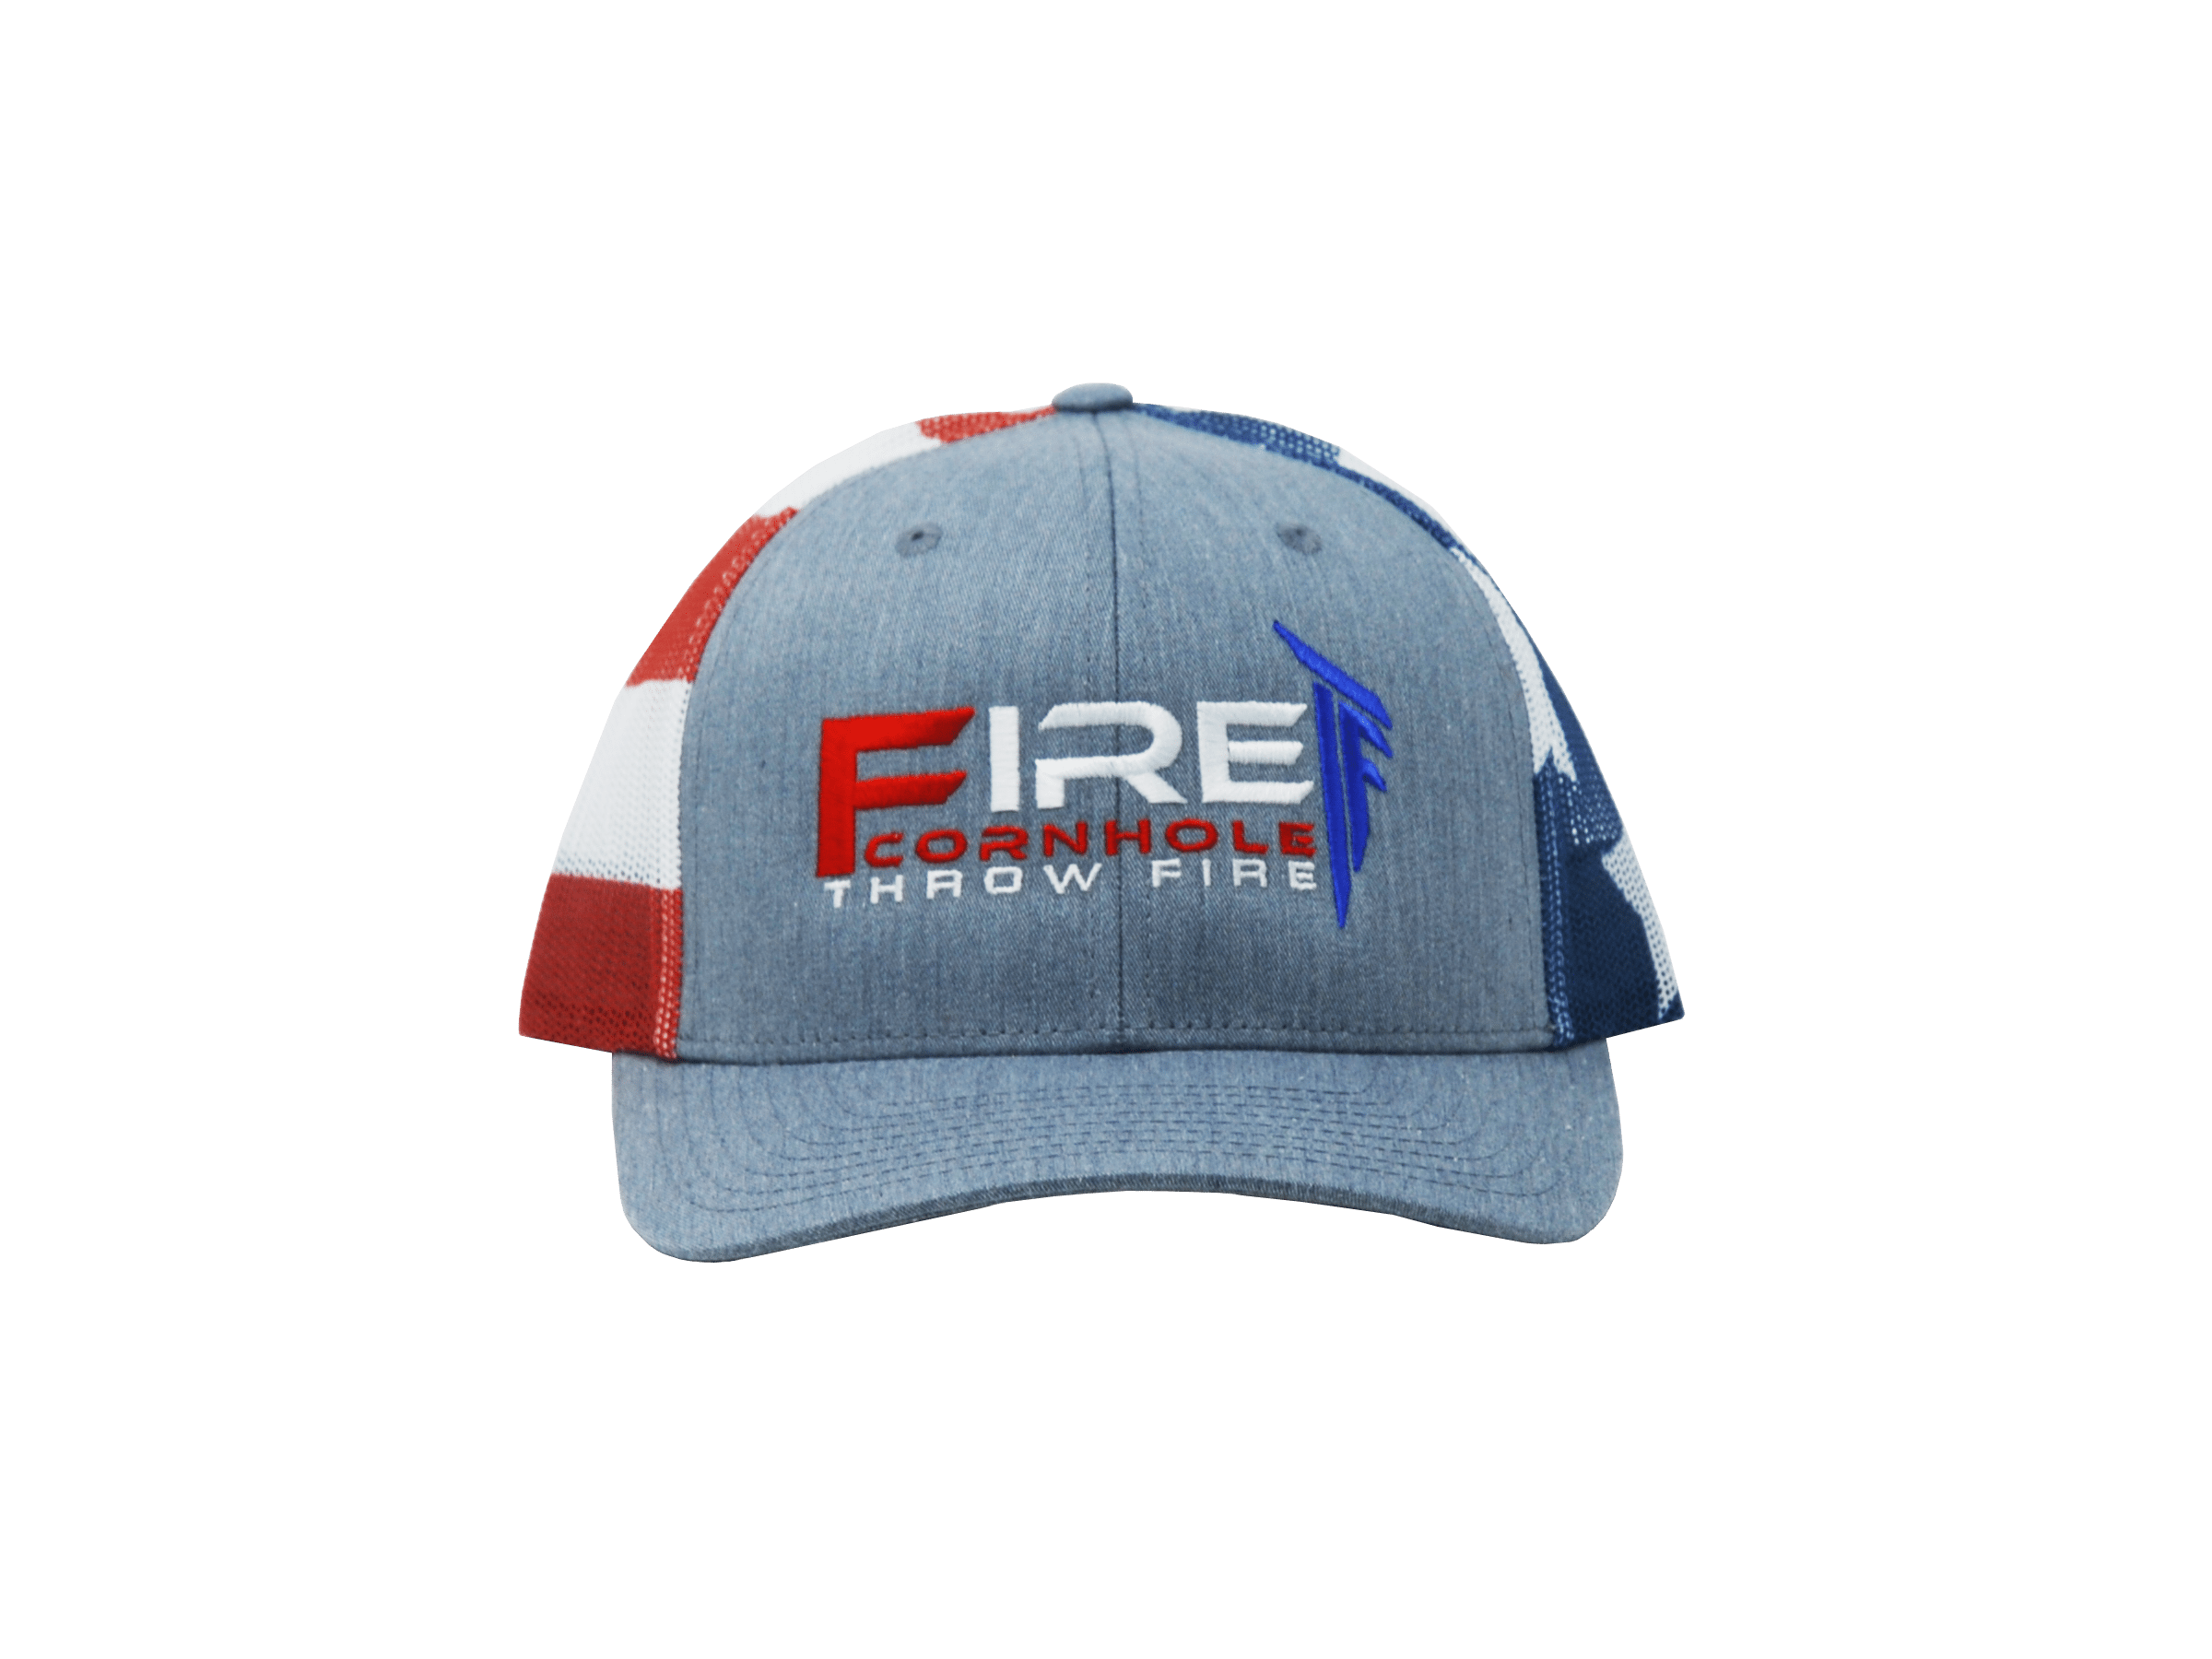 Fire Cornhole snapback hat with American flag pattern